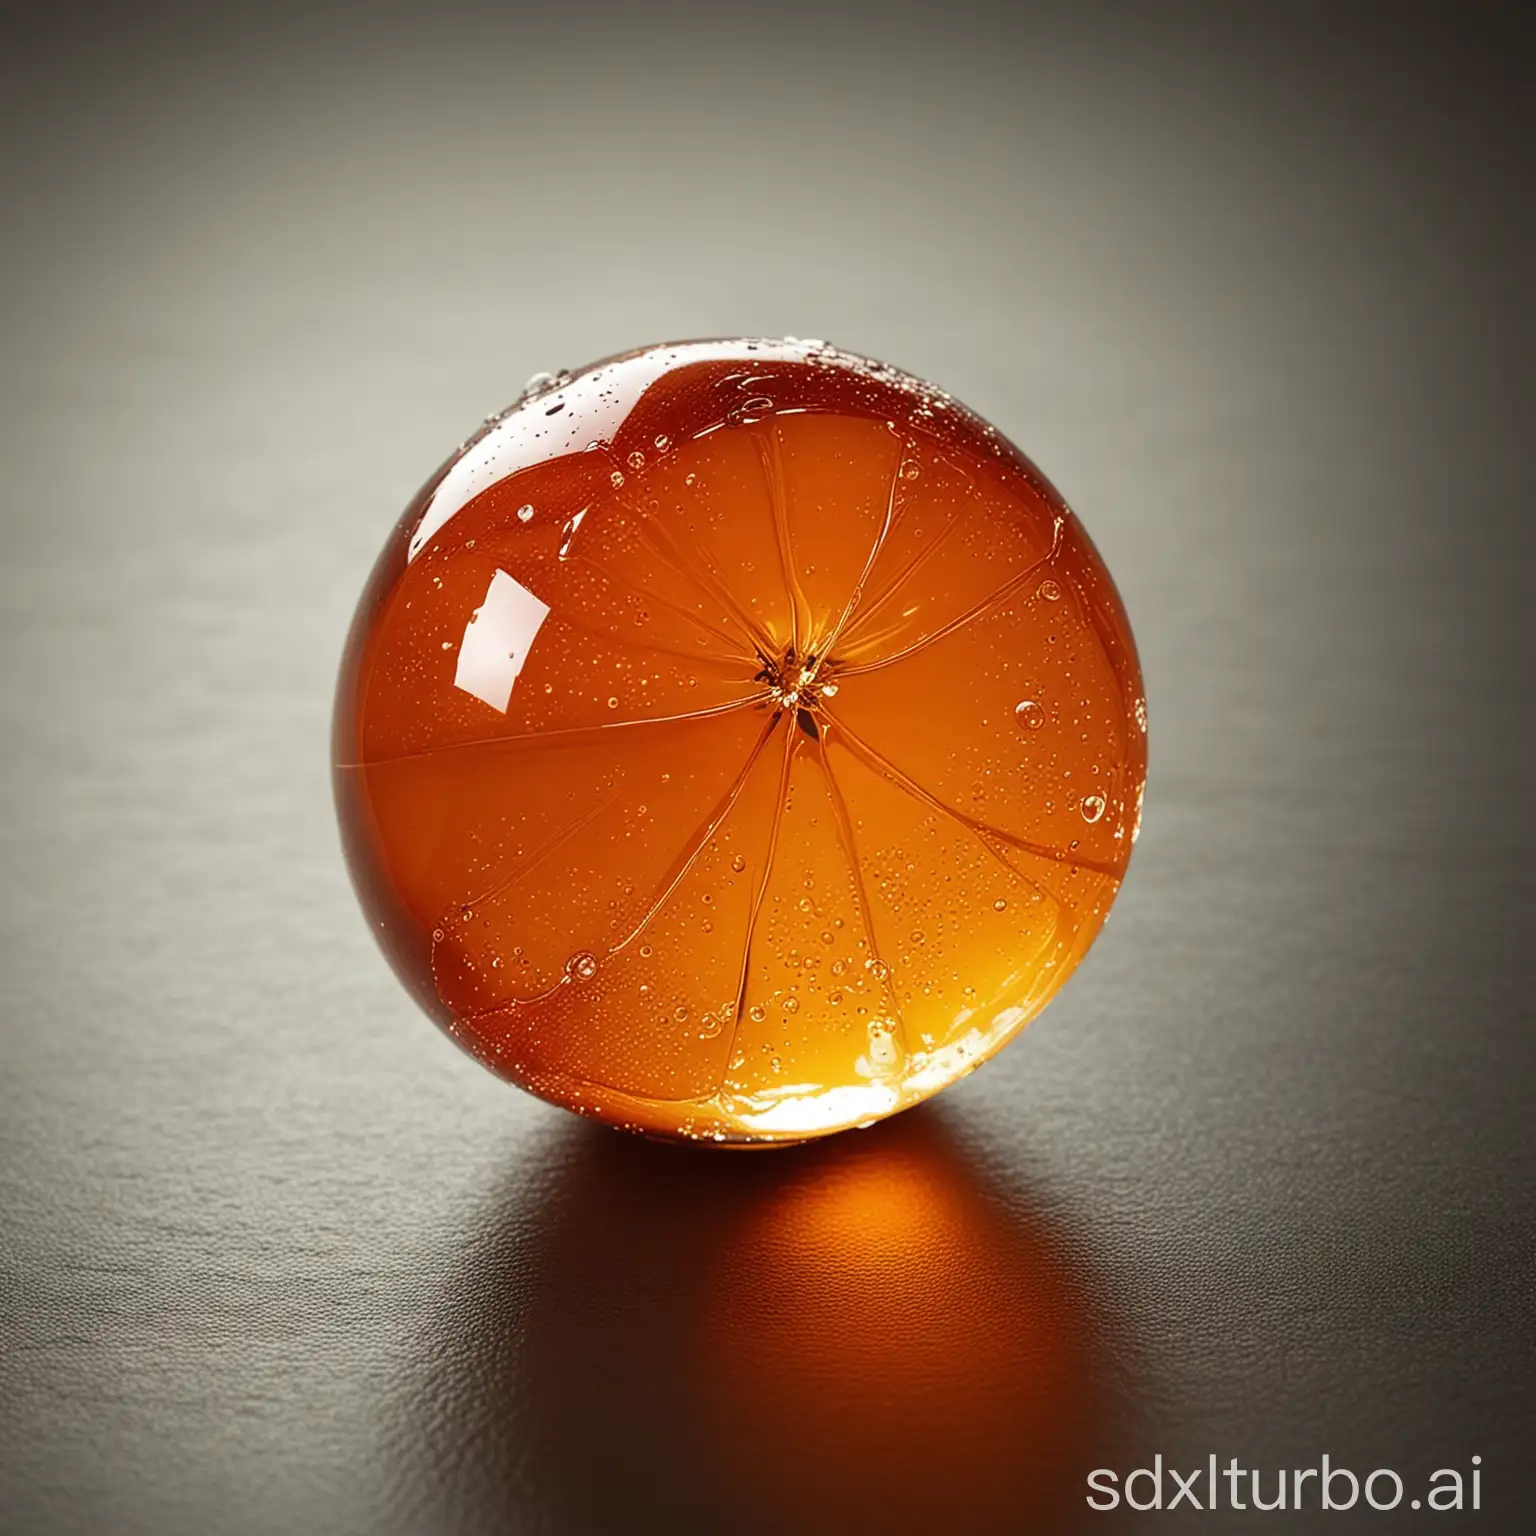 orange made of glass